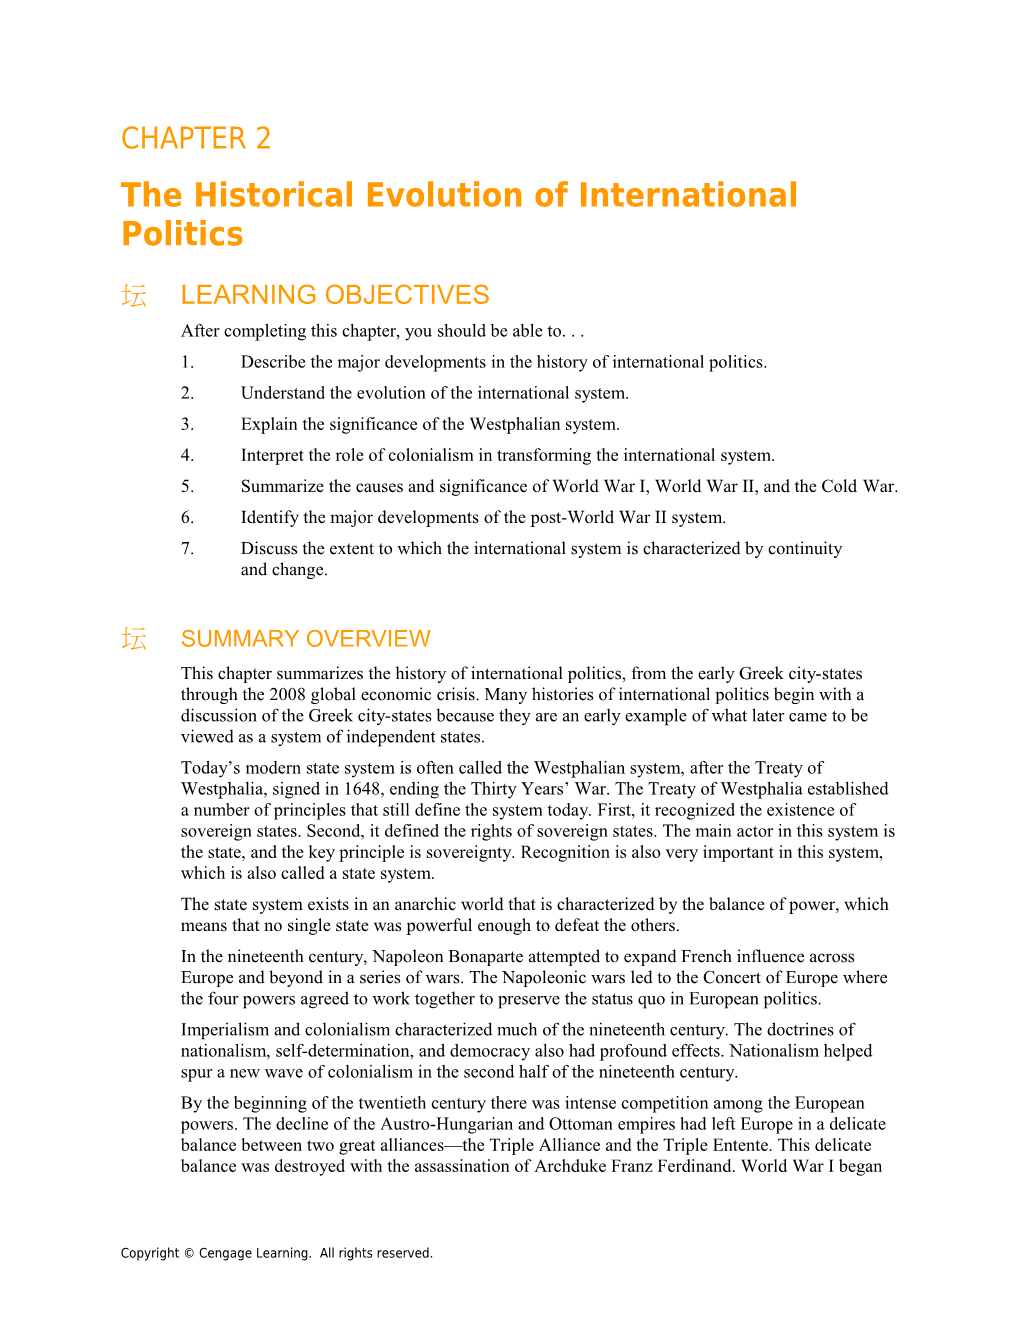 The Historicalevolution of International Politics